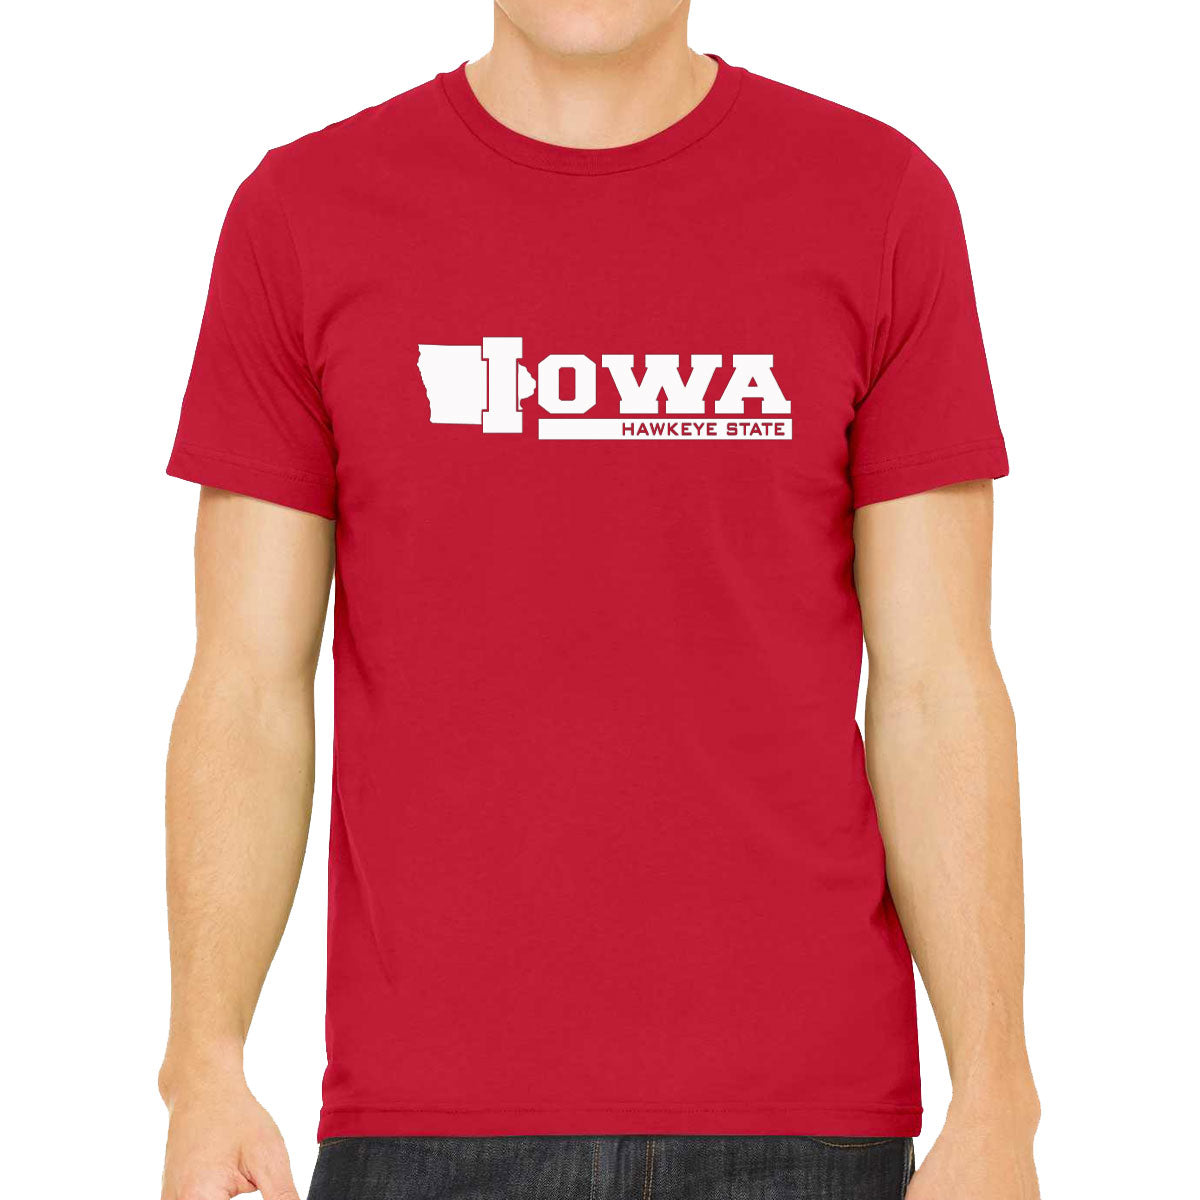 Iowa Hawkeye State Men's T-shirt